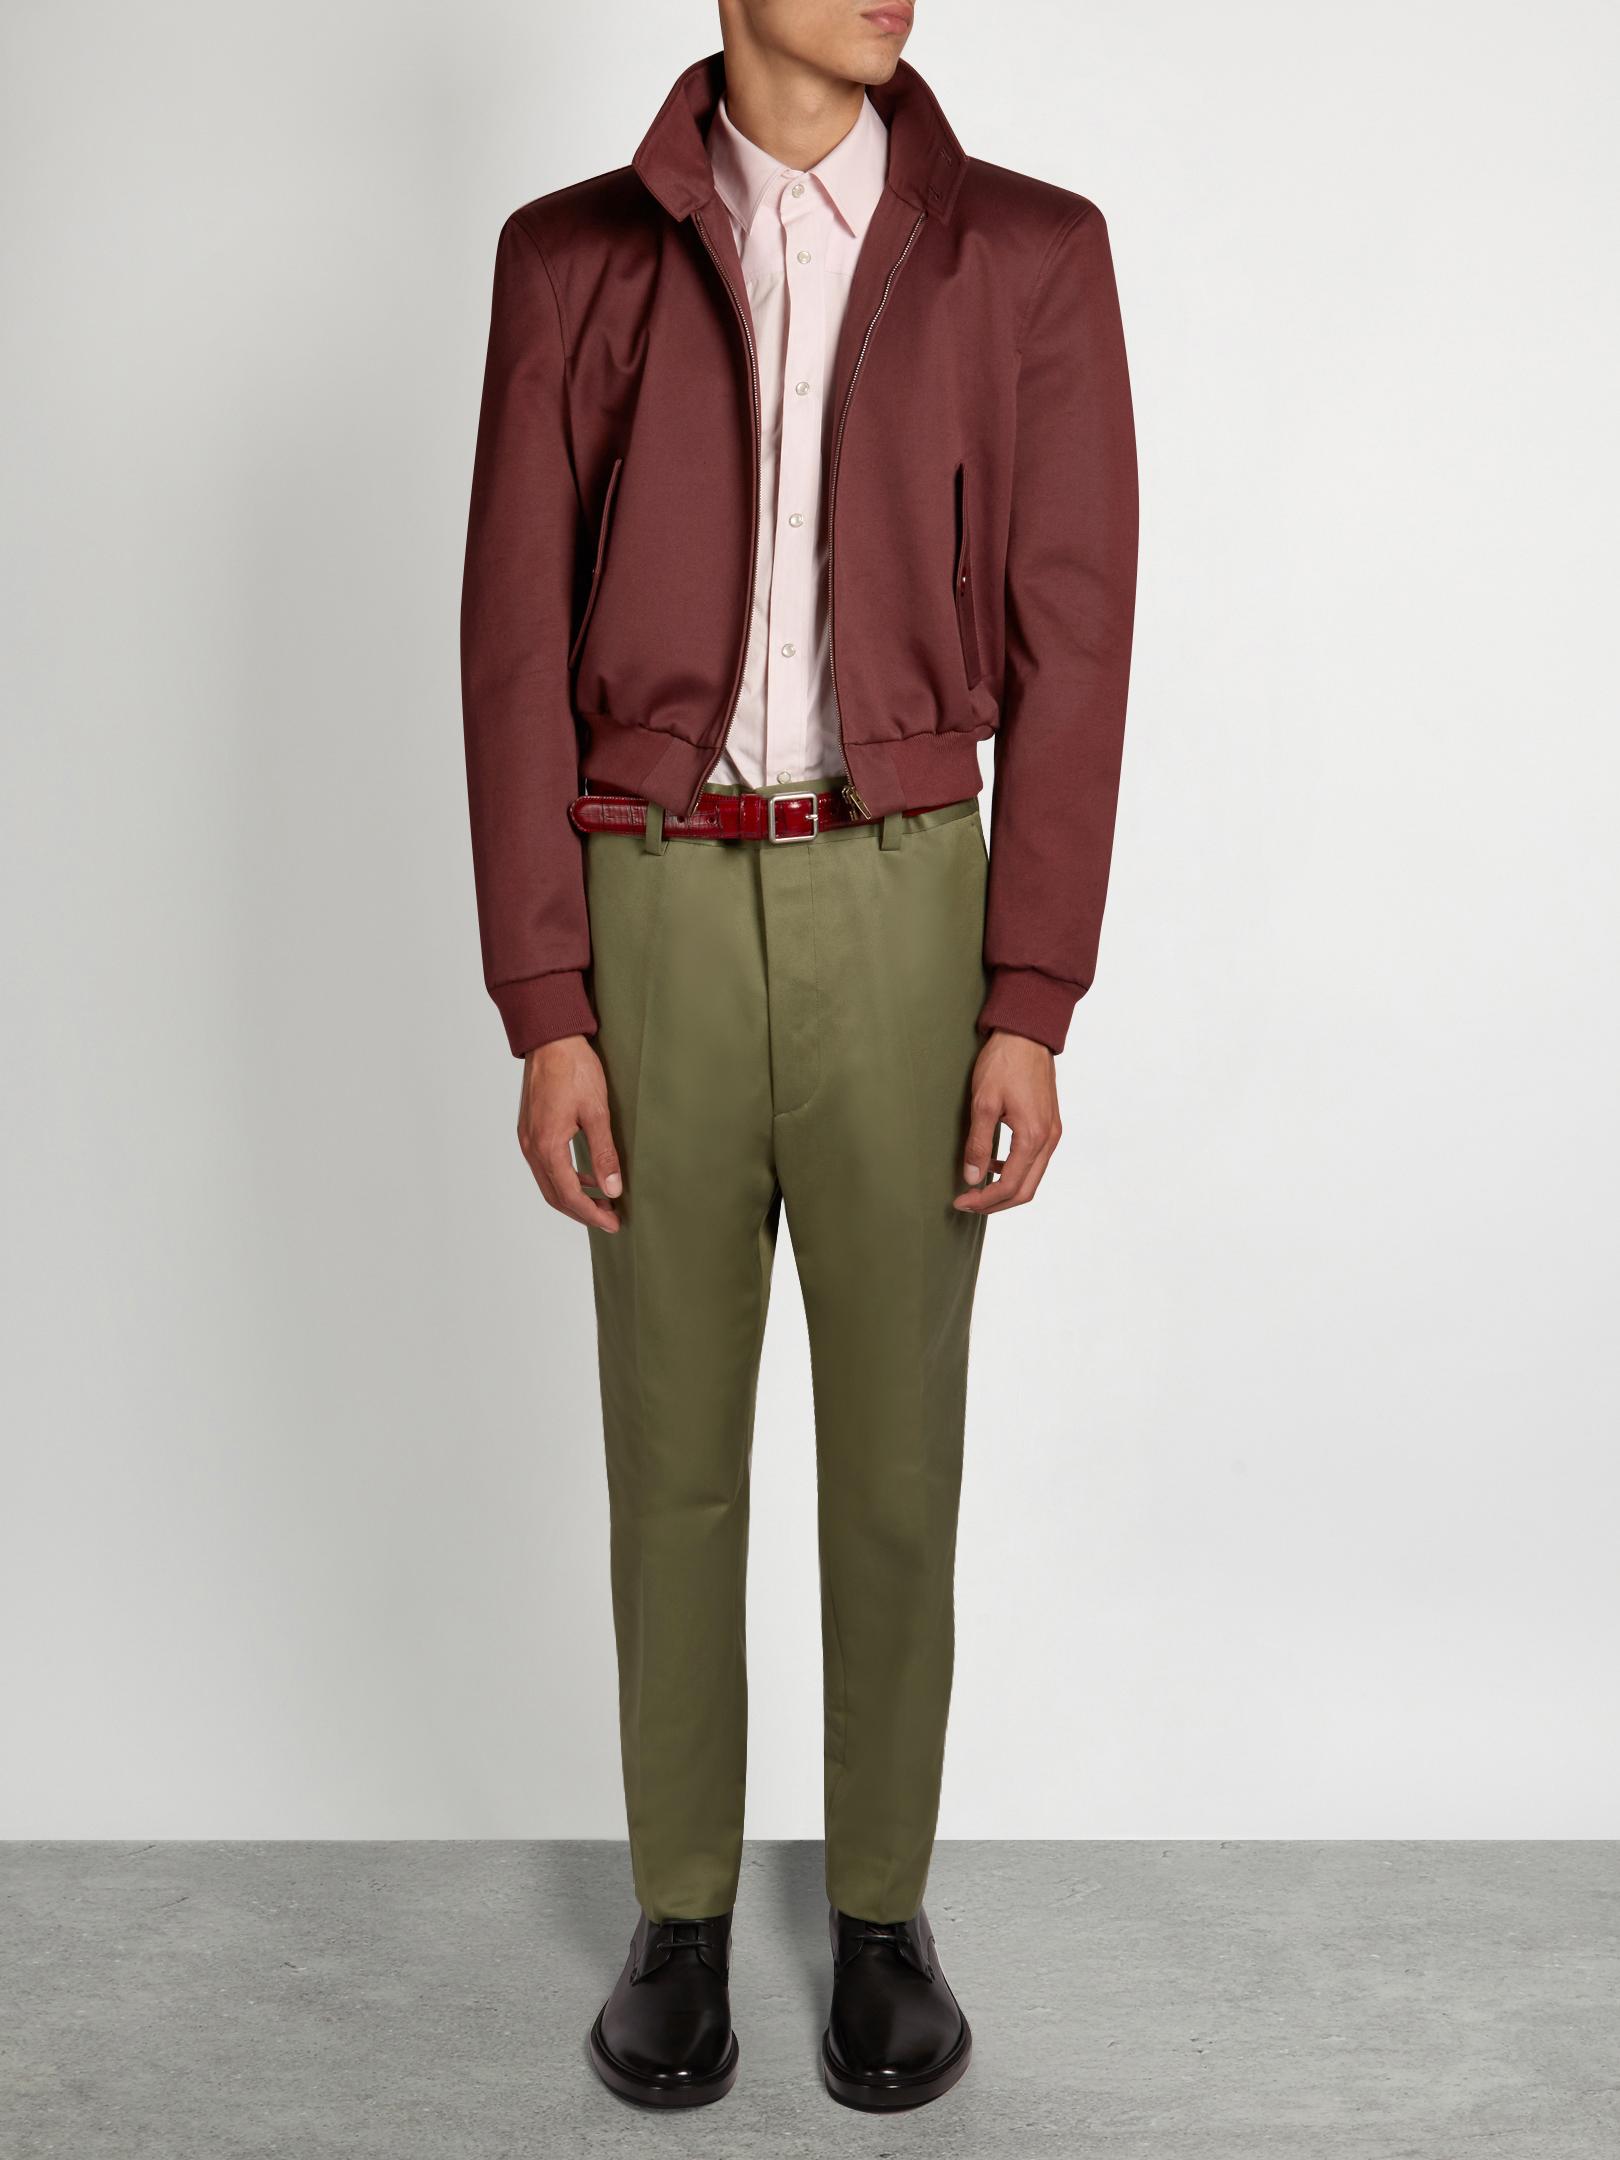 Balenciaga Harrington Cotton-blend Cropped Jacket for Men - Lyst